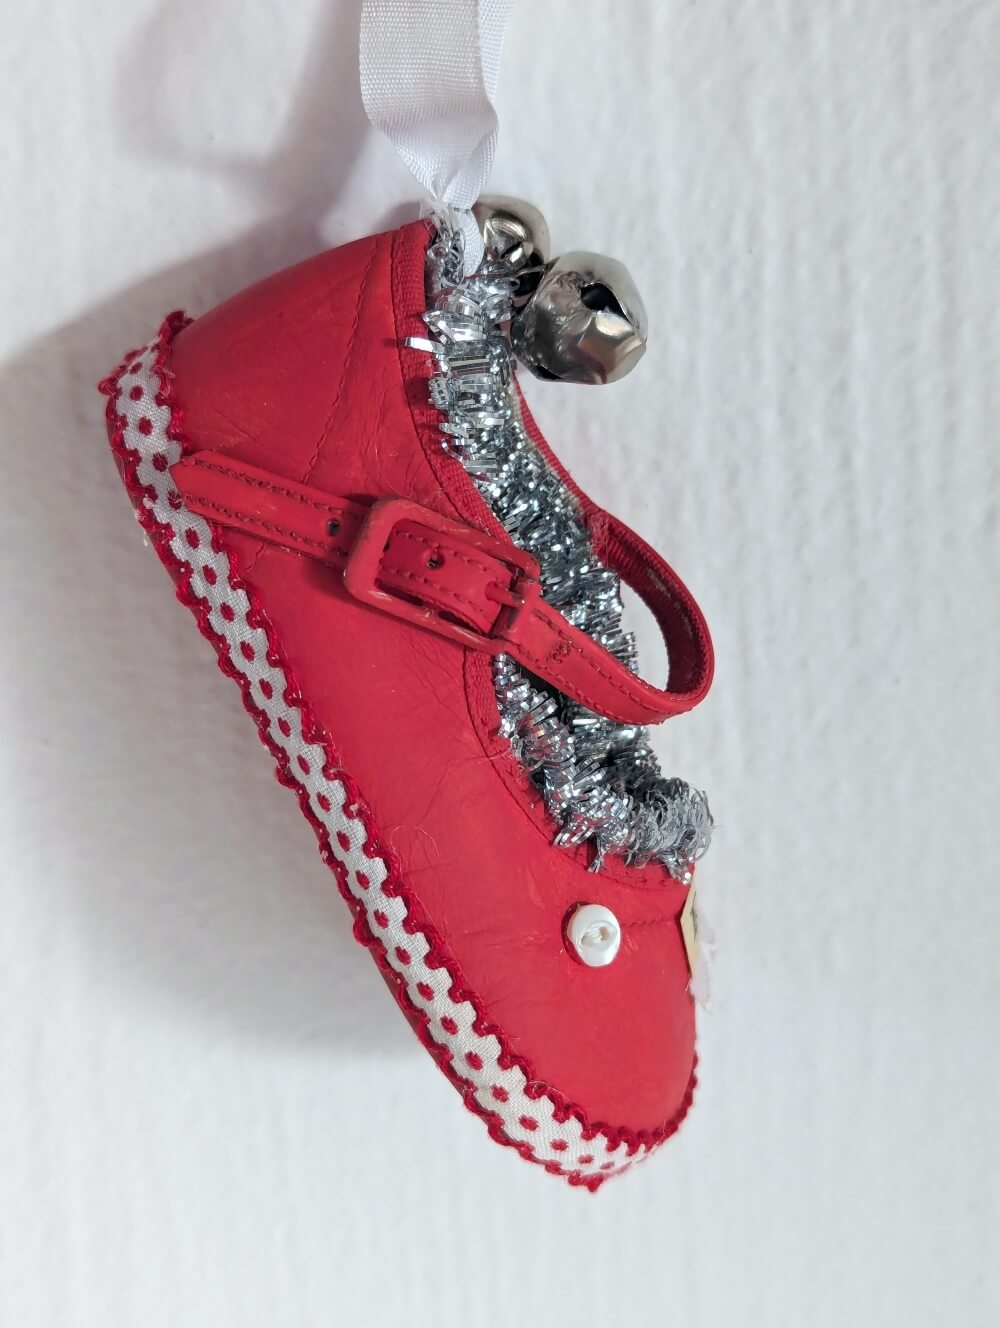 Repurposed Baby Shoe Ornaments